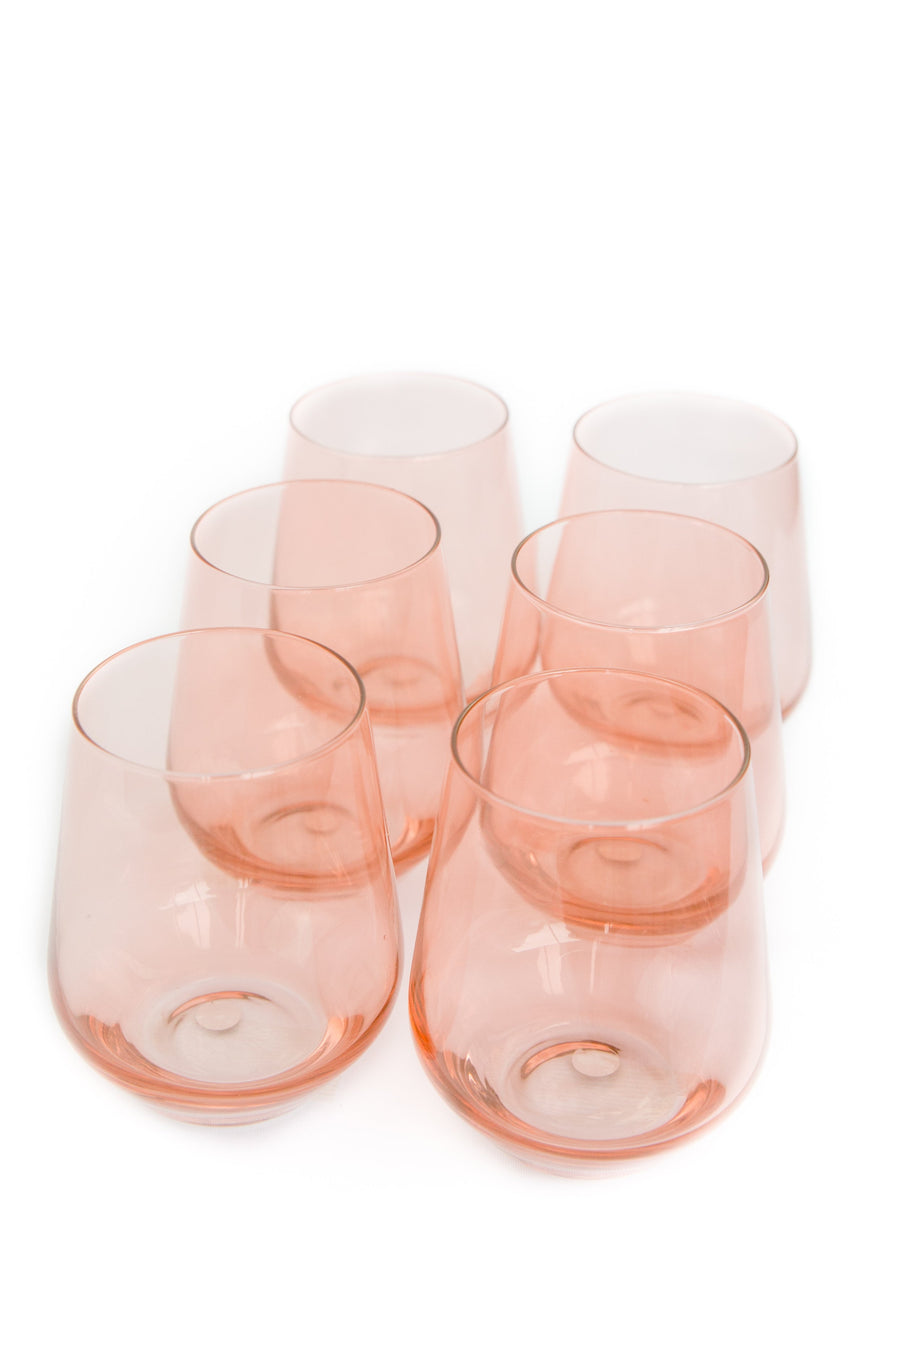 Stemless Wine Glasses - Set of 6